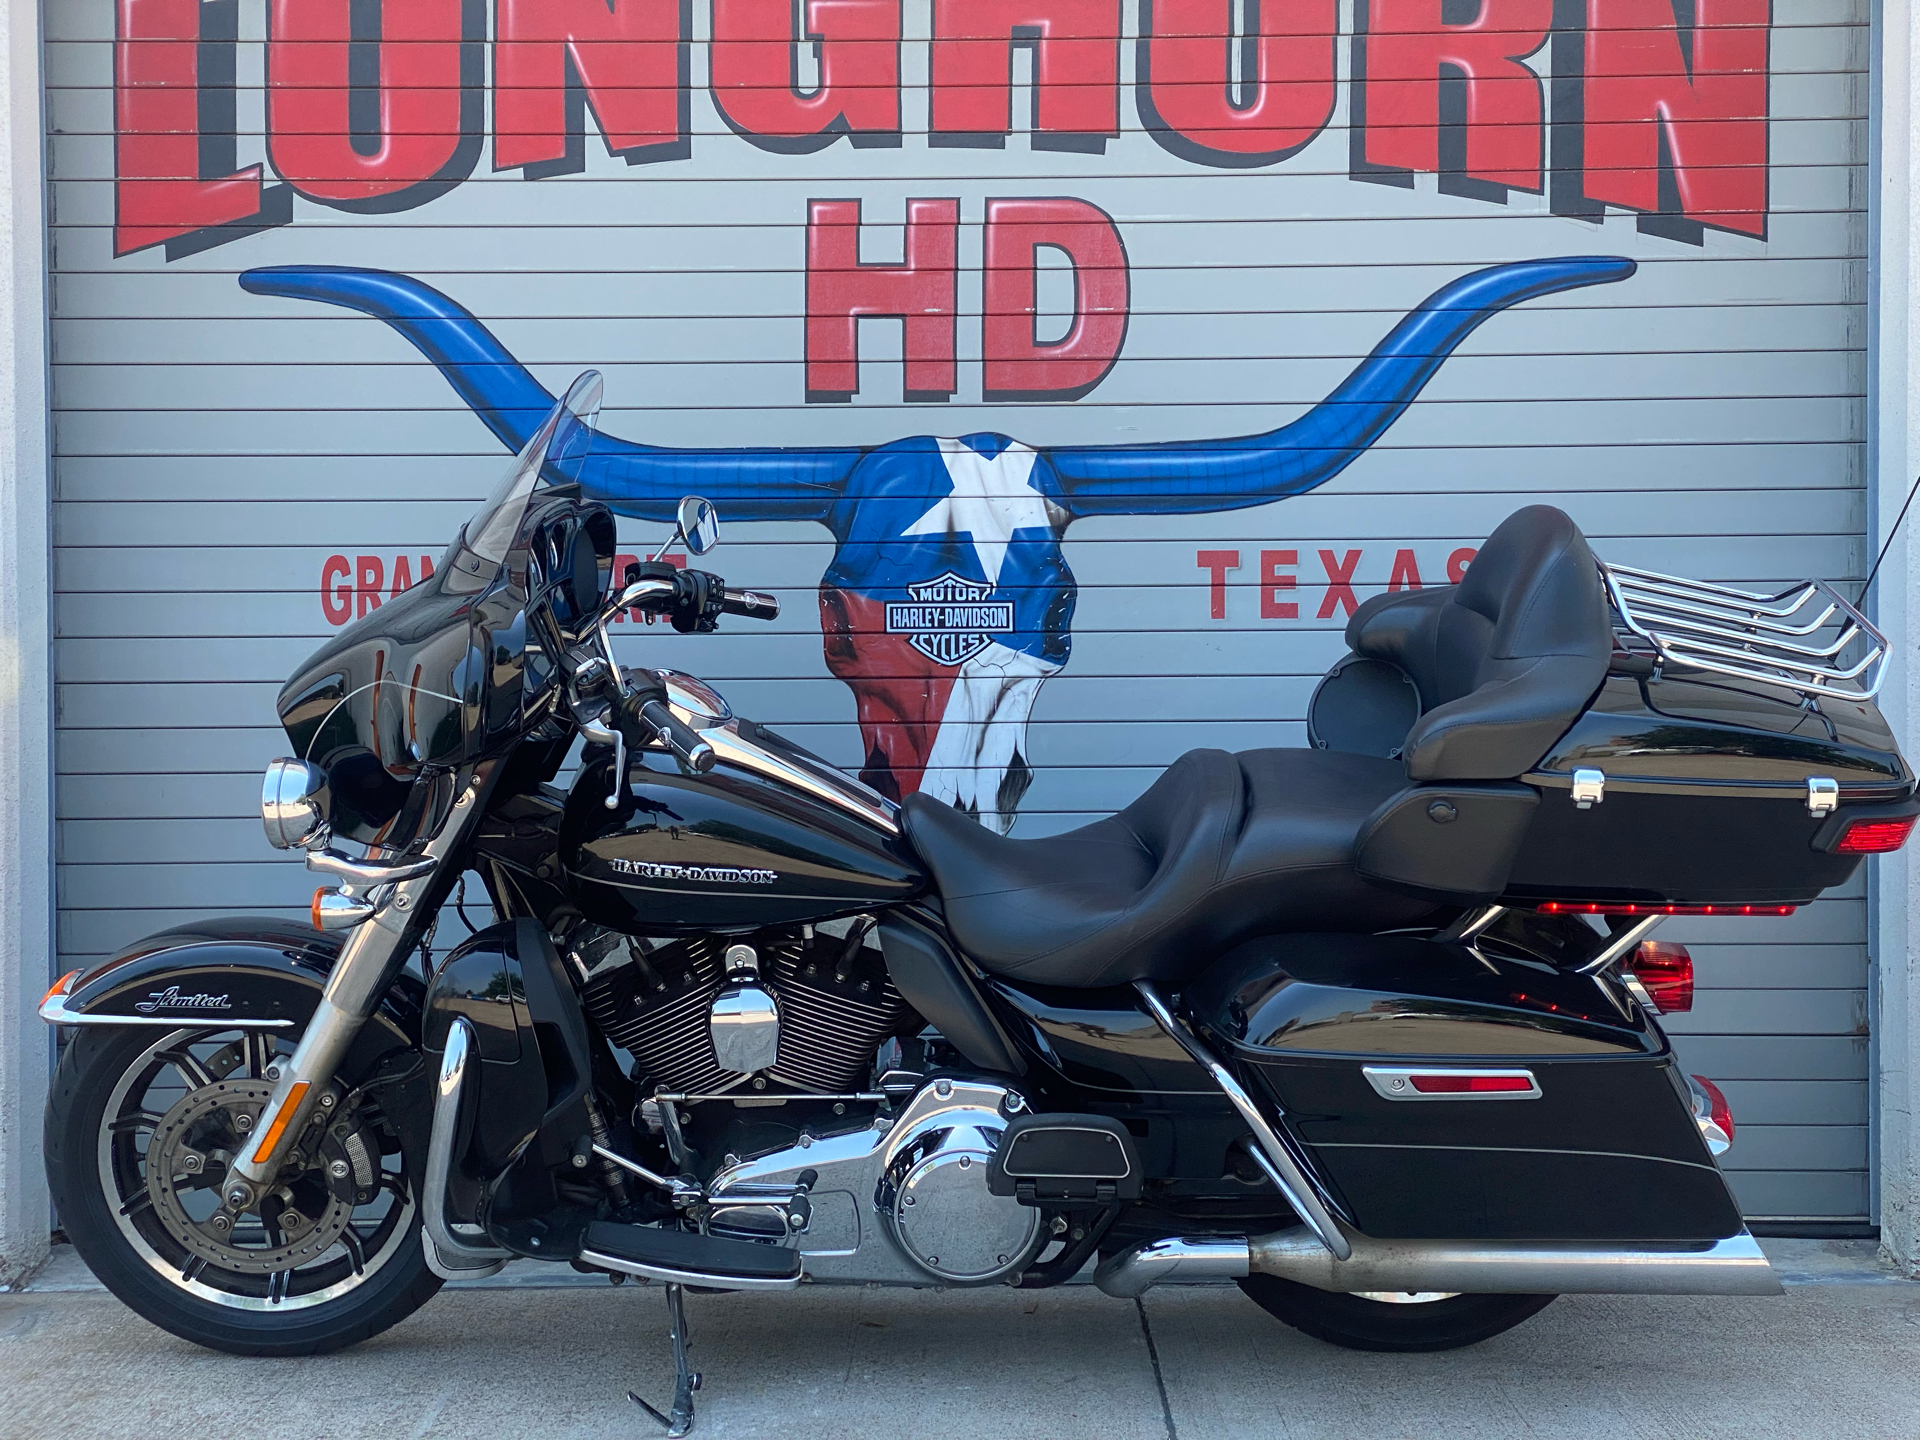 2014 Harley-Davidson Ultra Limited in Grand Prairie, Texas - Photo 15